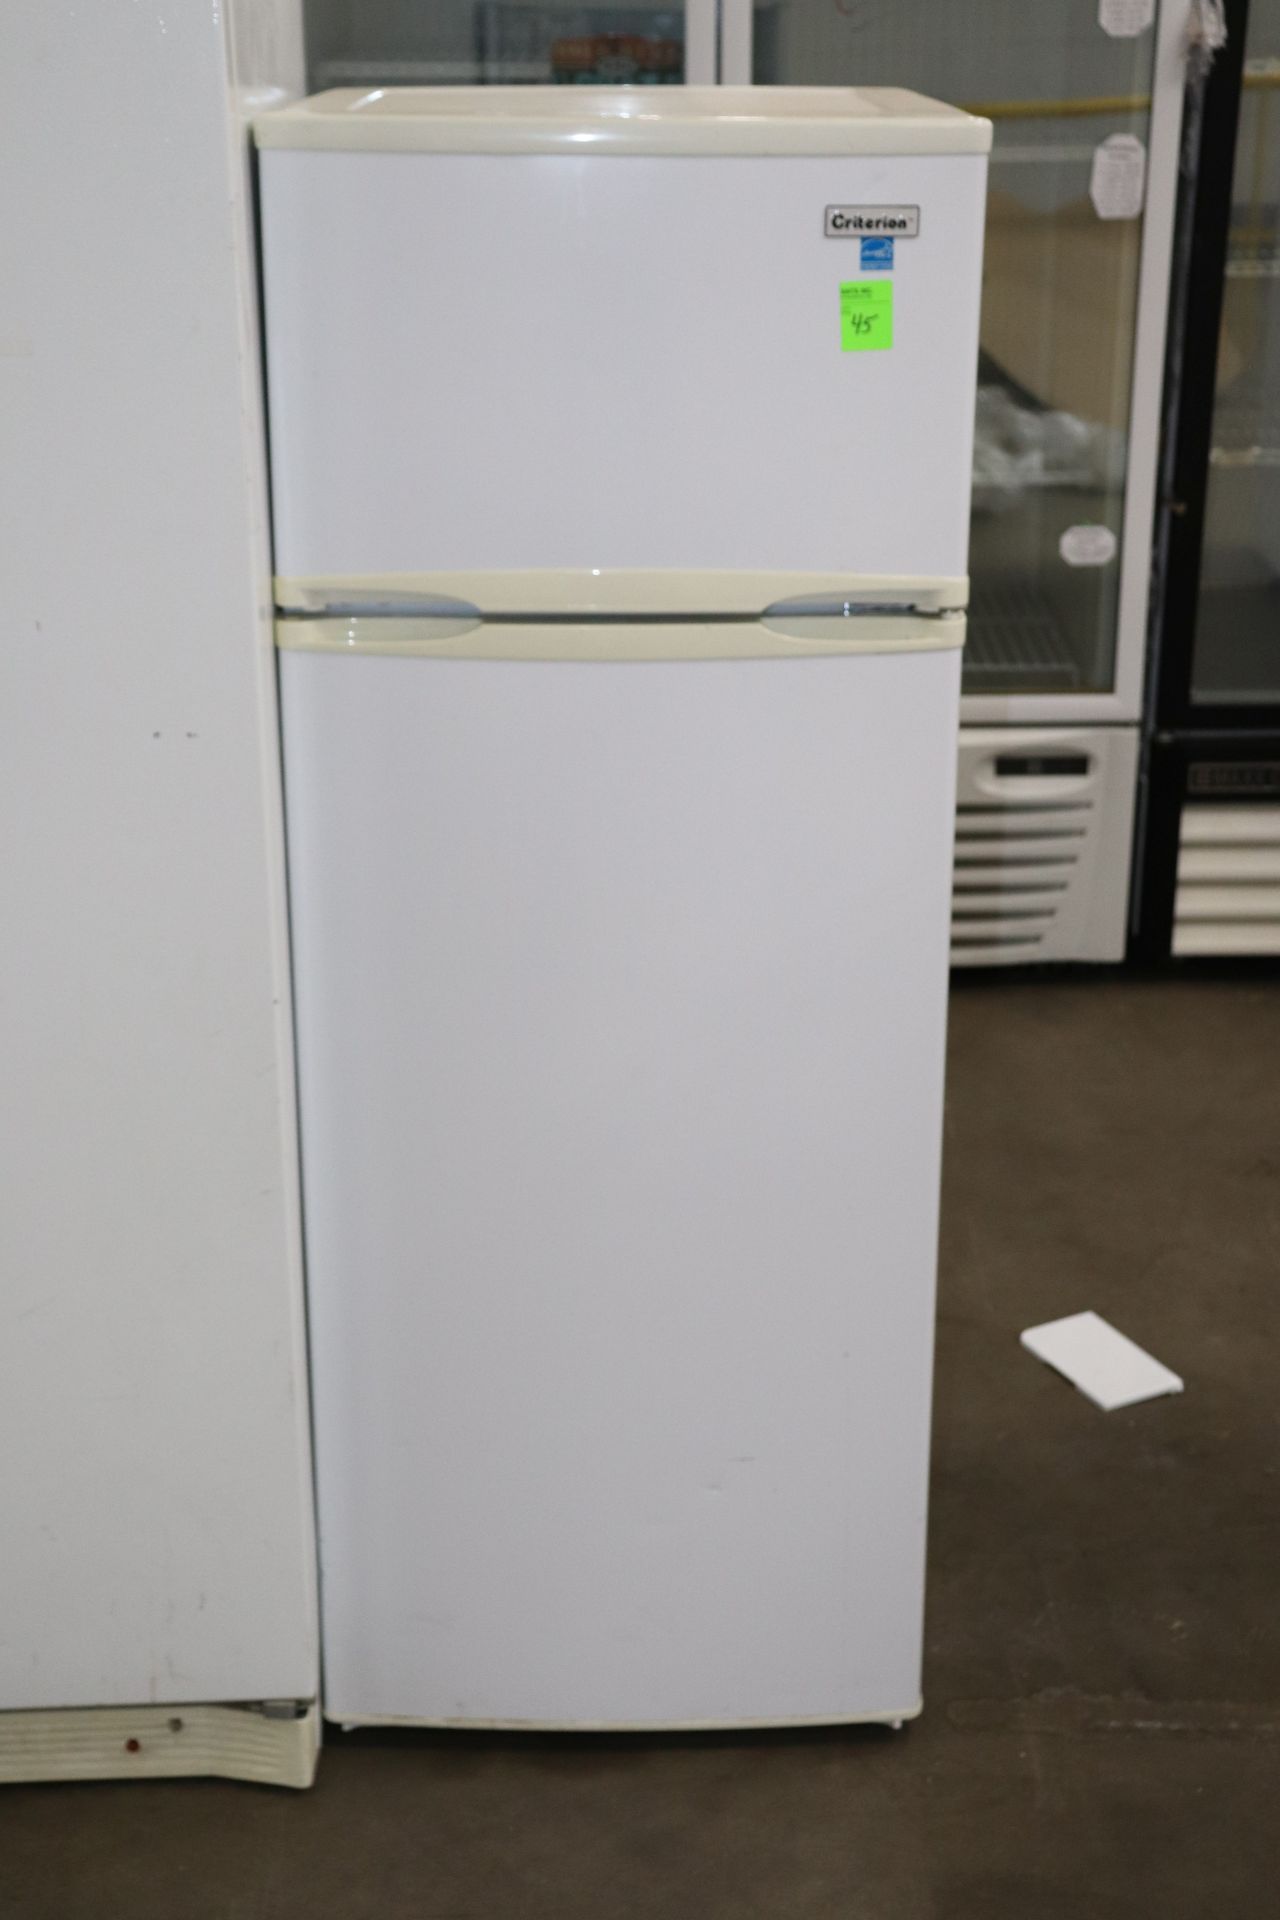 Criterion Combination Freezer/Refrigerator, Model CTMR73A1W, Serial A57779707351581000027